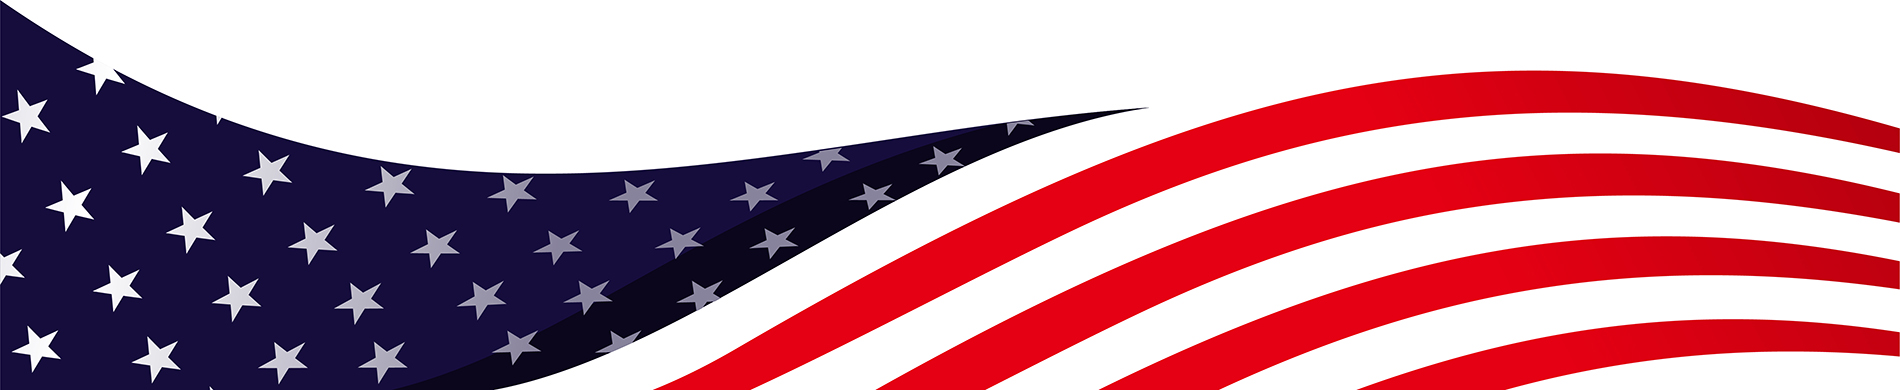 American flag decorative image